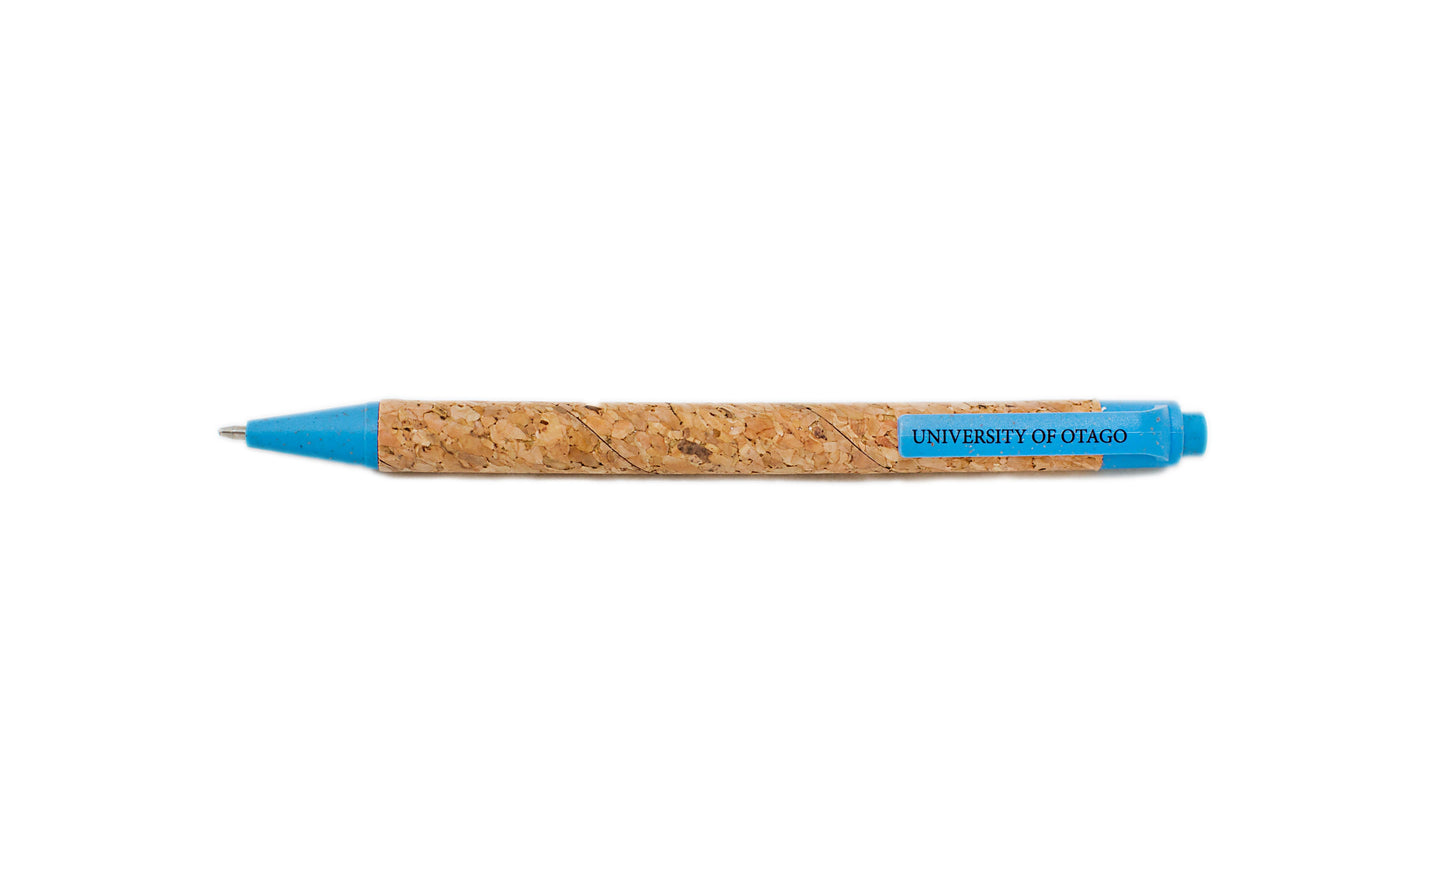 Cork and wheat straw ball pen